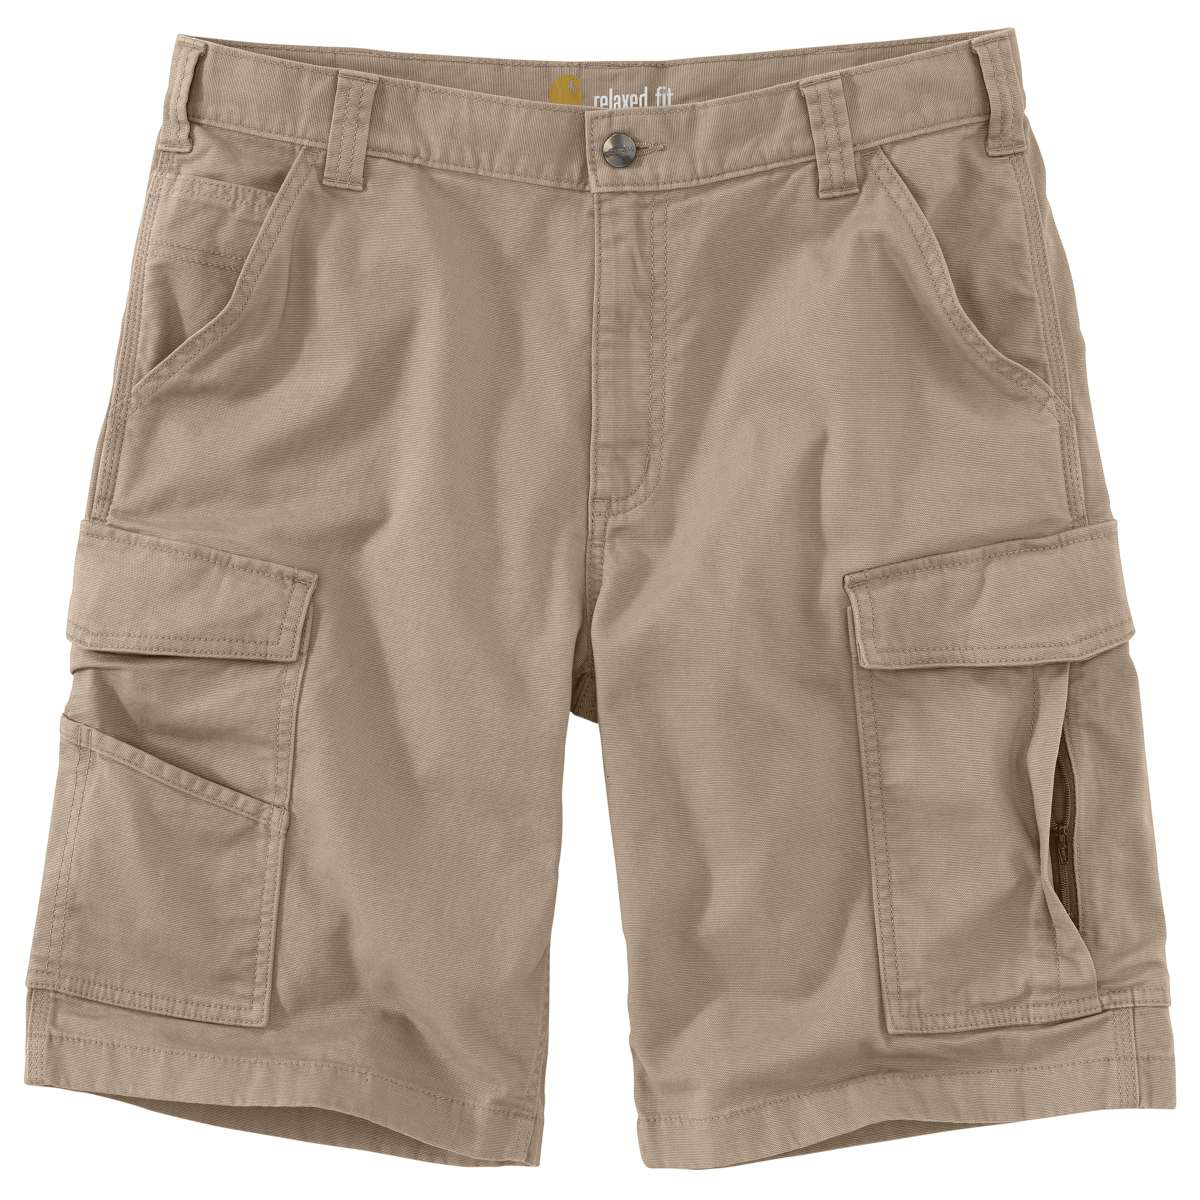 Carhartt Men's Rugged Flex Rigby Cargo Shorts - Brown, 33